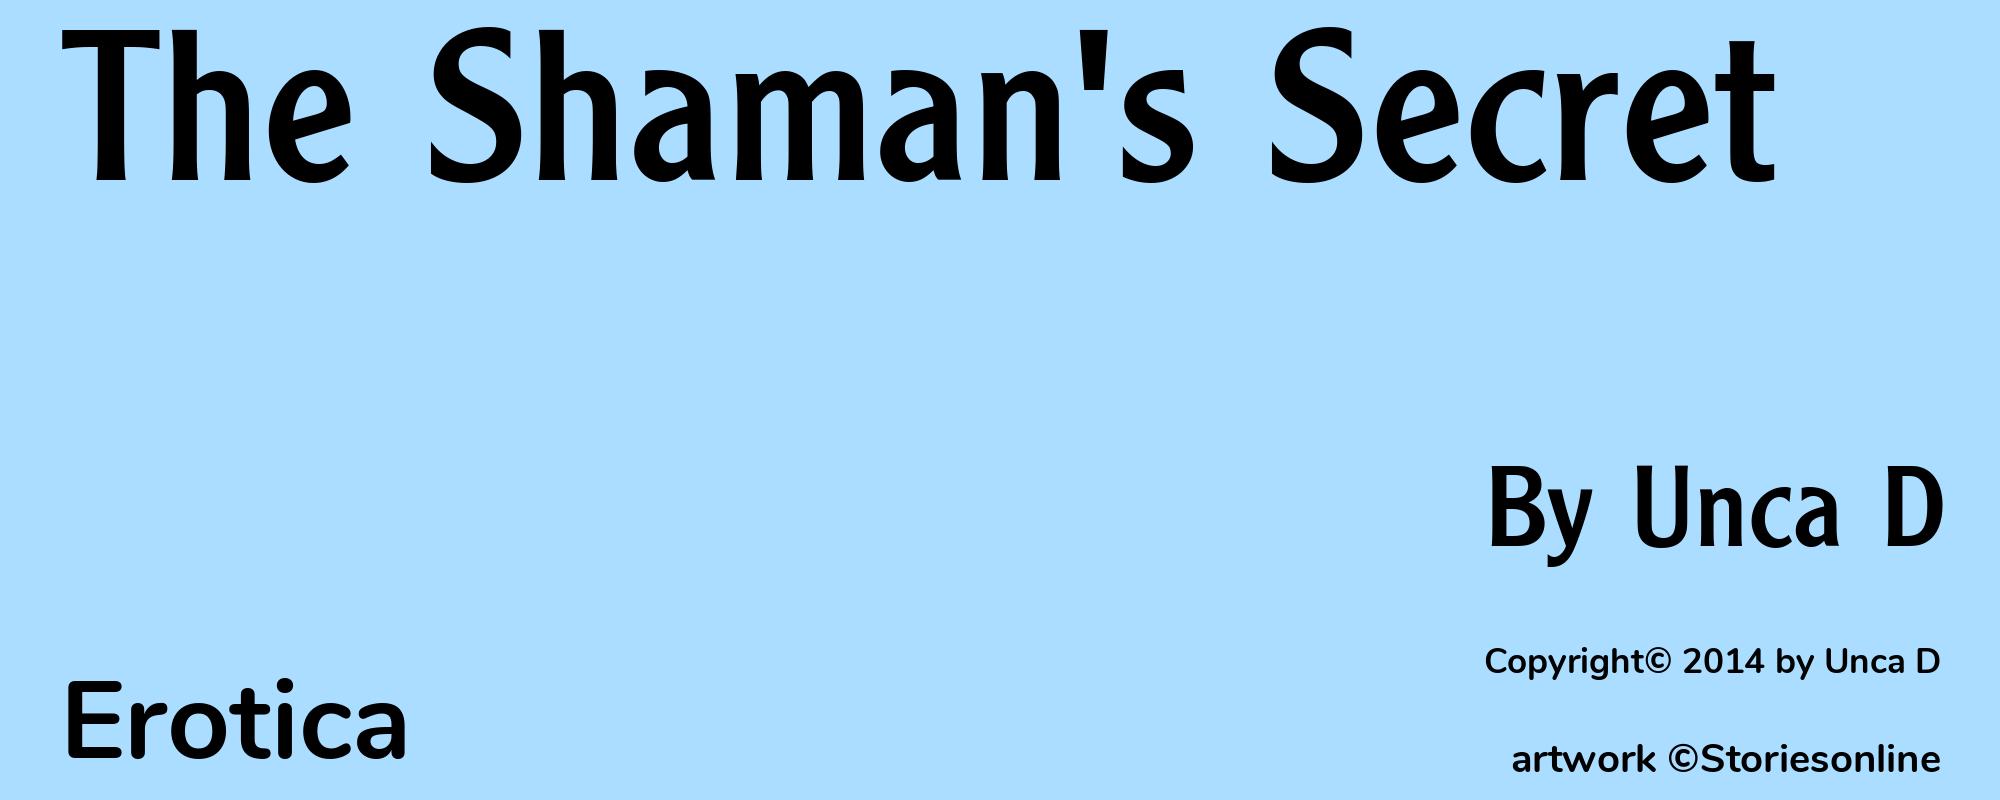 The Shaman's Secret - Cover